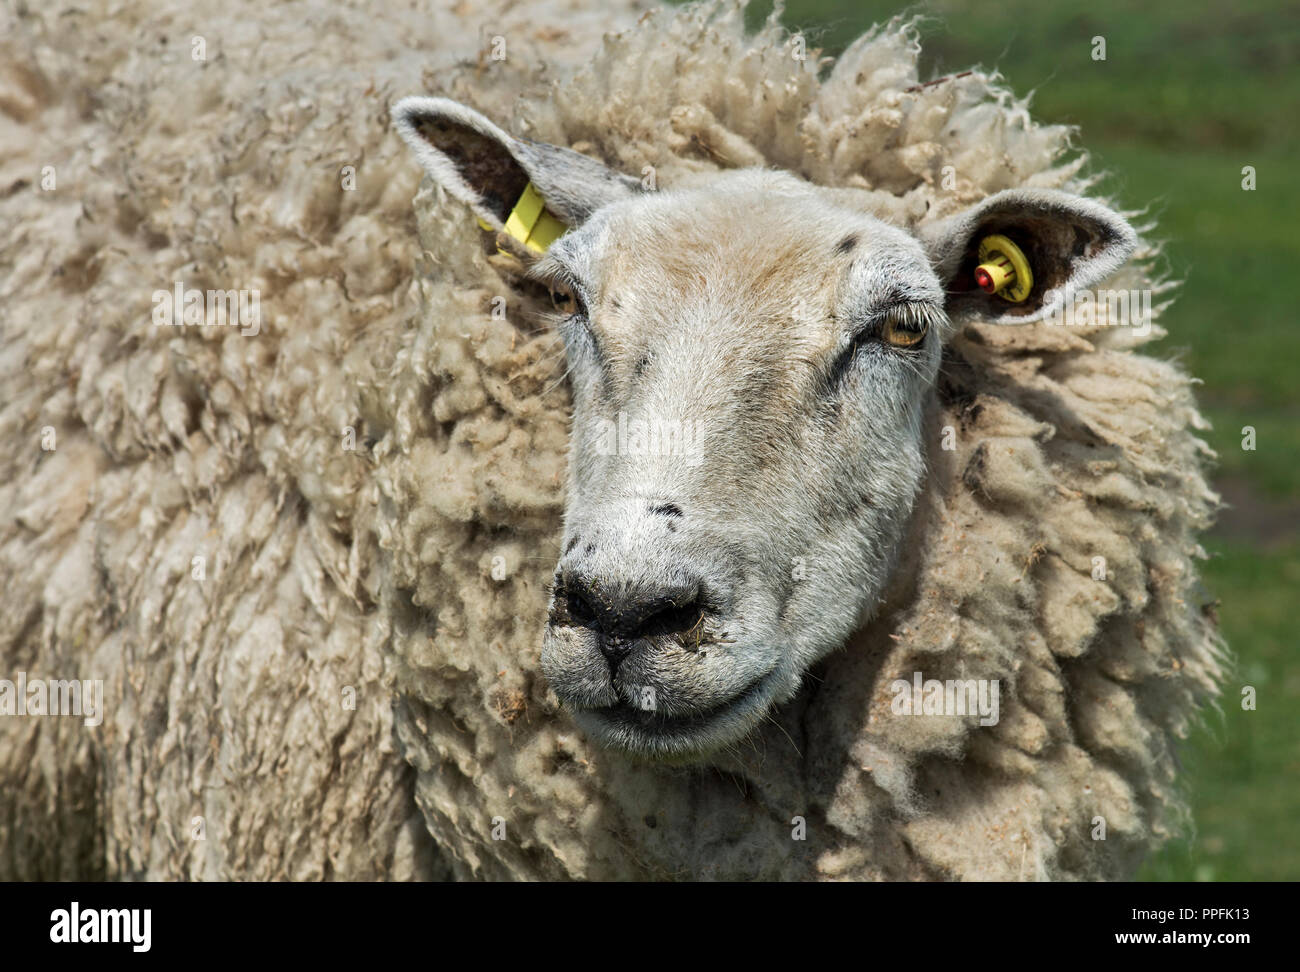 Texel sheep, Schleswig-Holstein, Germany Stock Photo